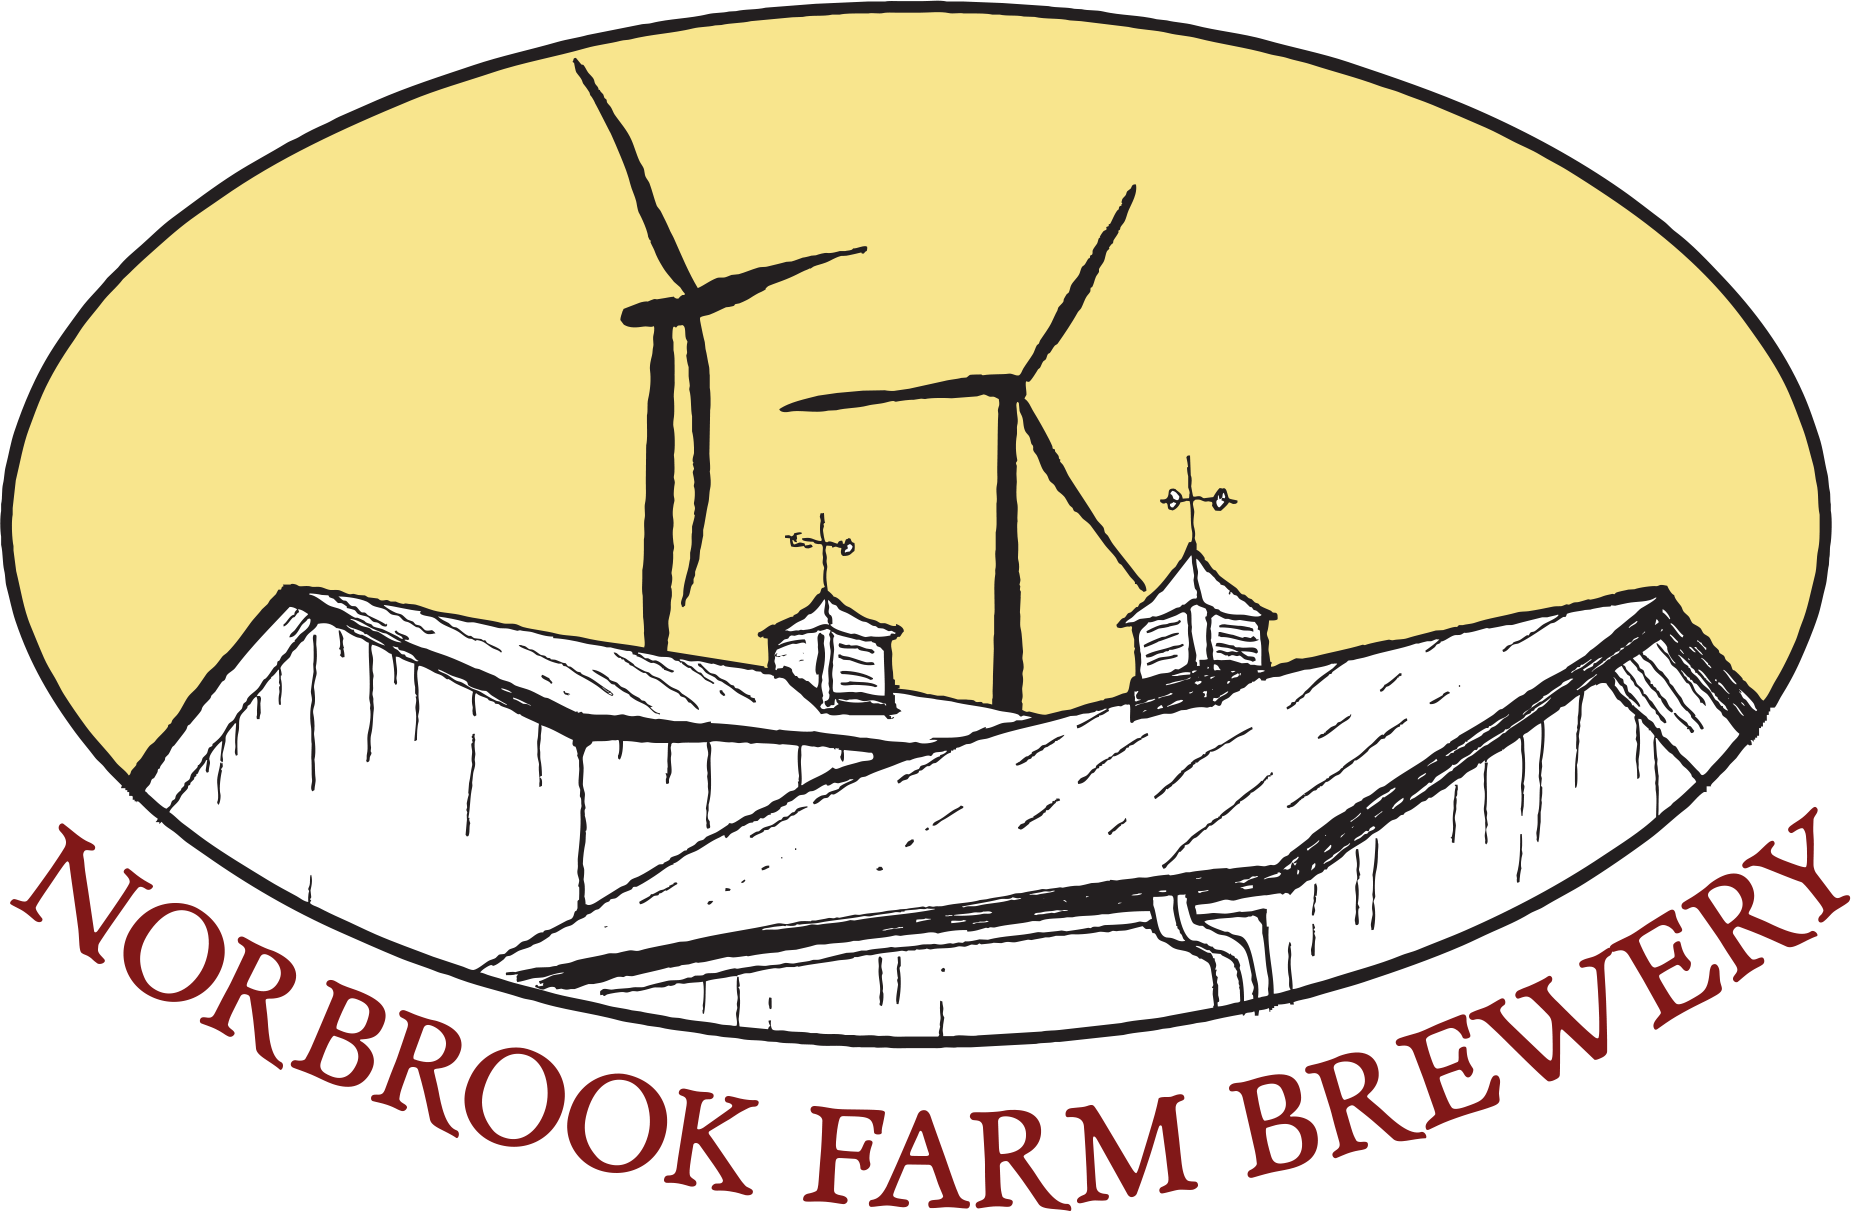 Norbrook-color-logo.png